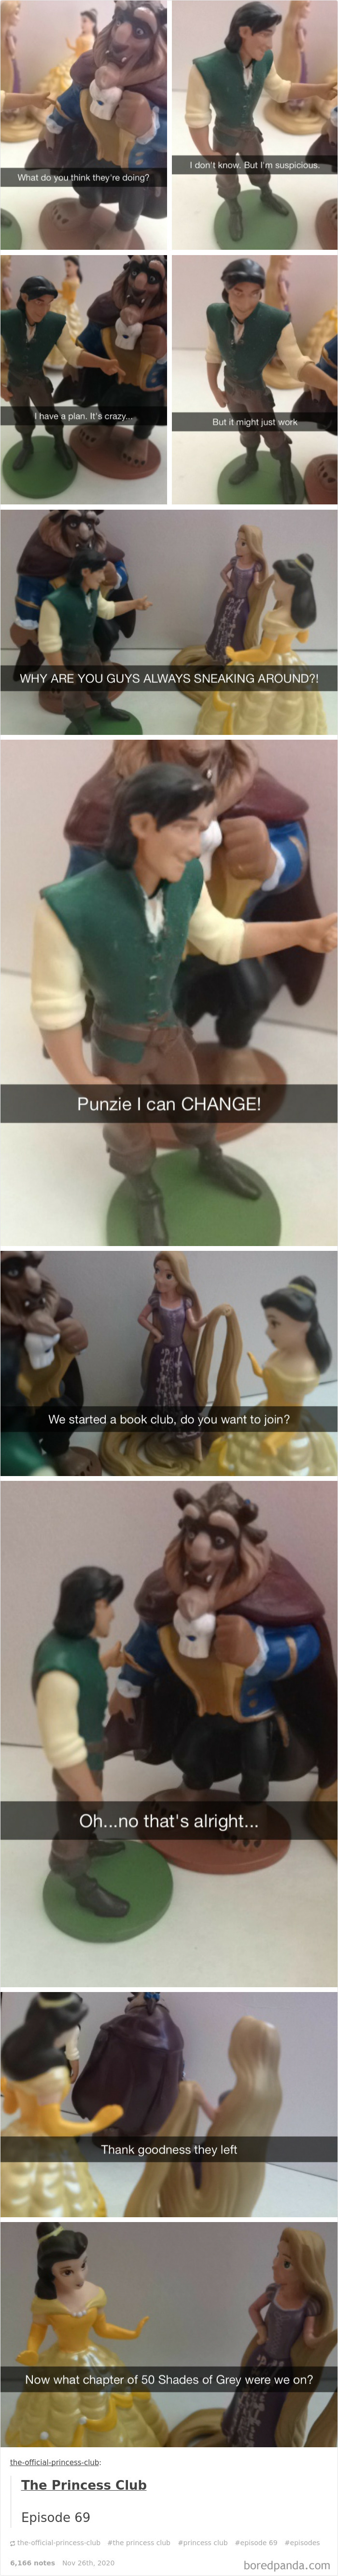 The Official Princess Book Club